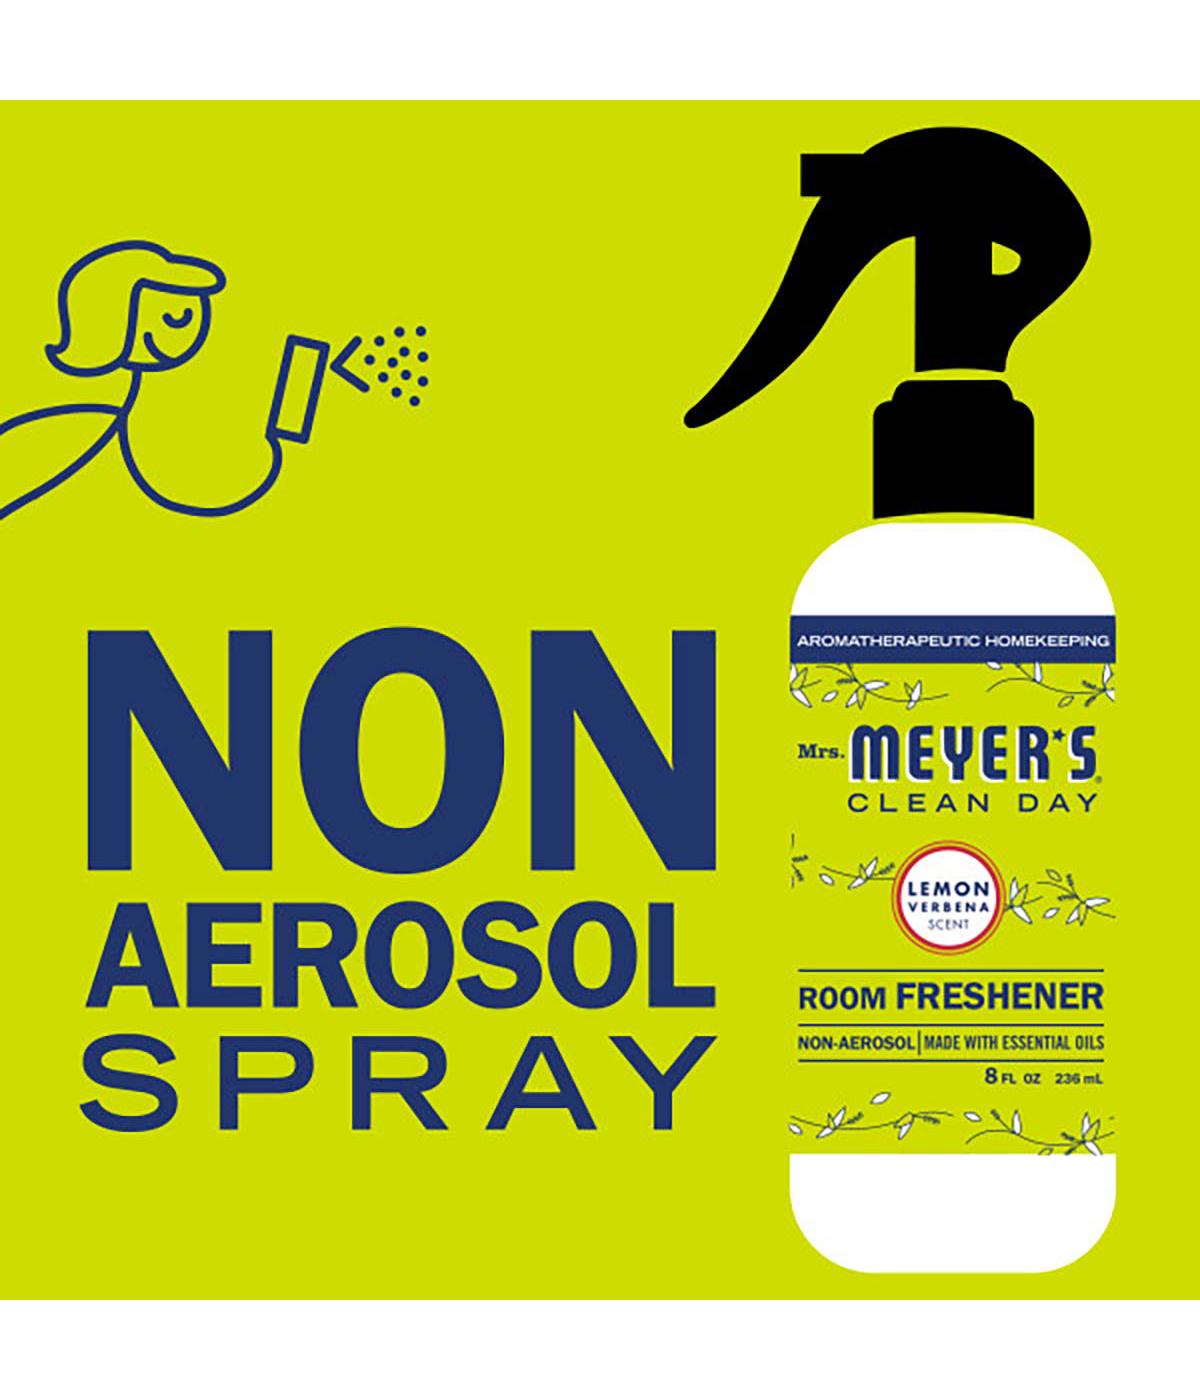 Mrs. Meyer's Clean Day Lemon Verbena Room Freshener Spray; image 2 of 6